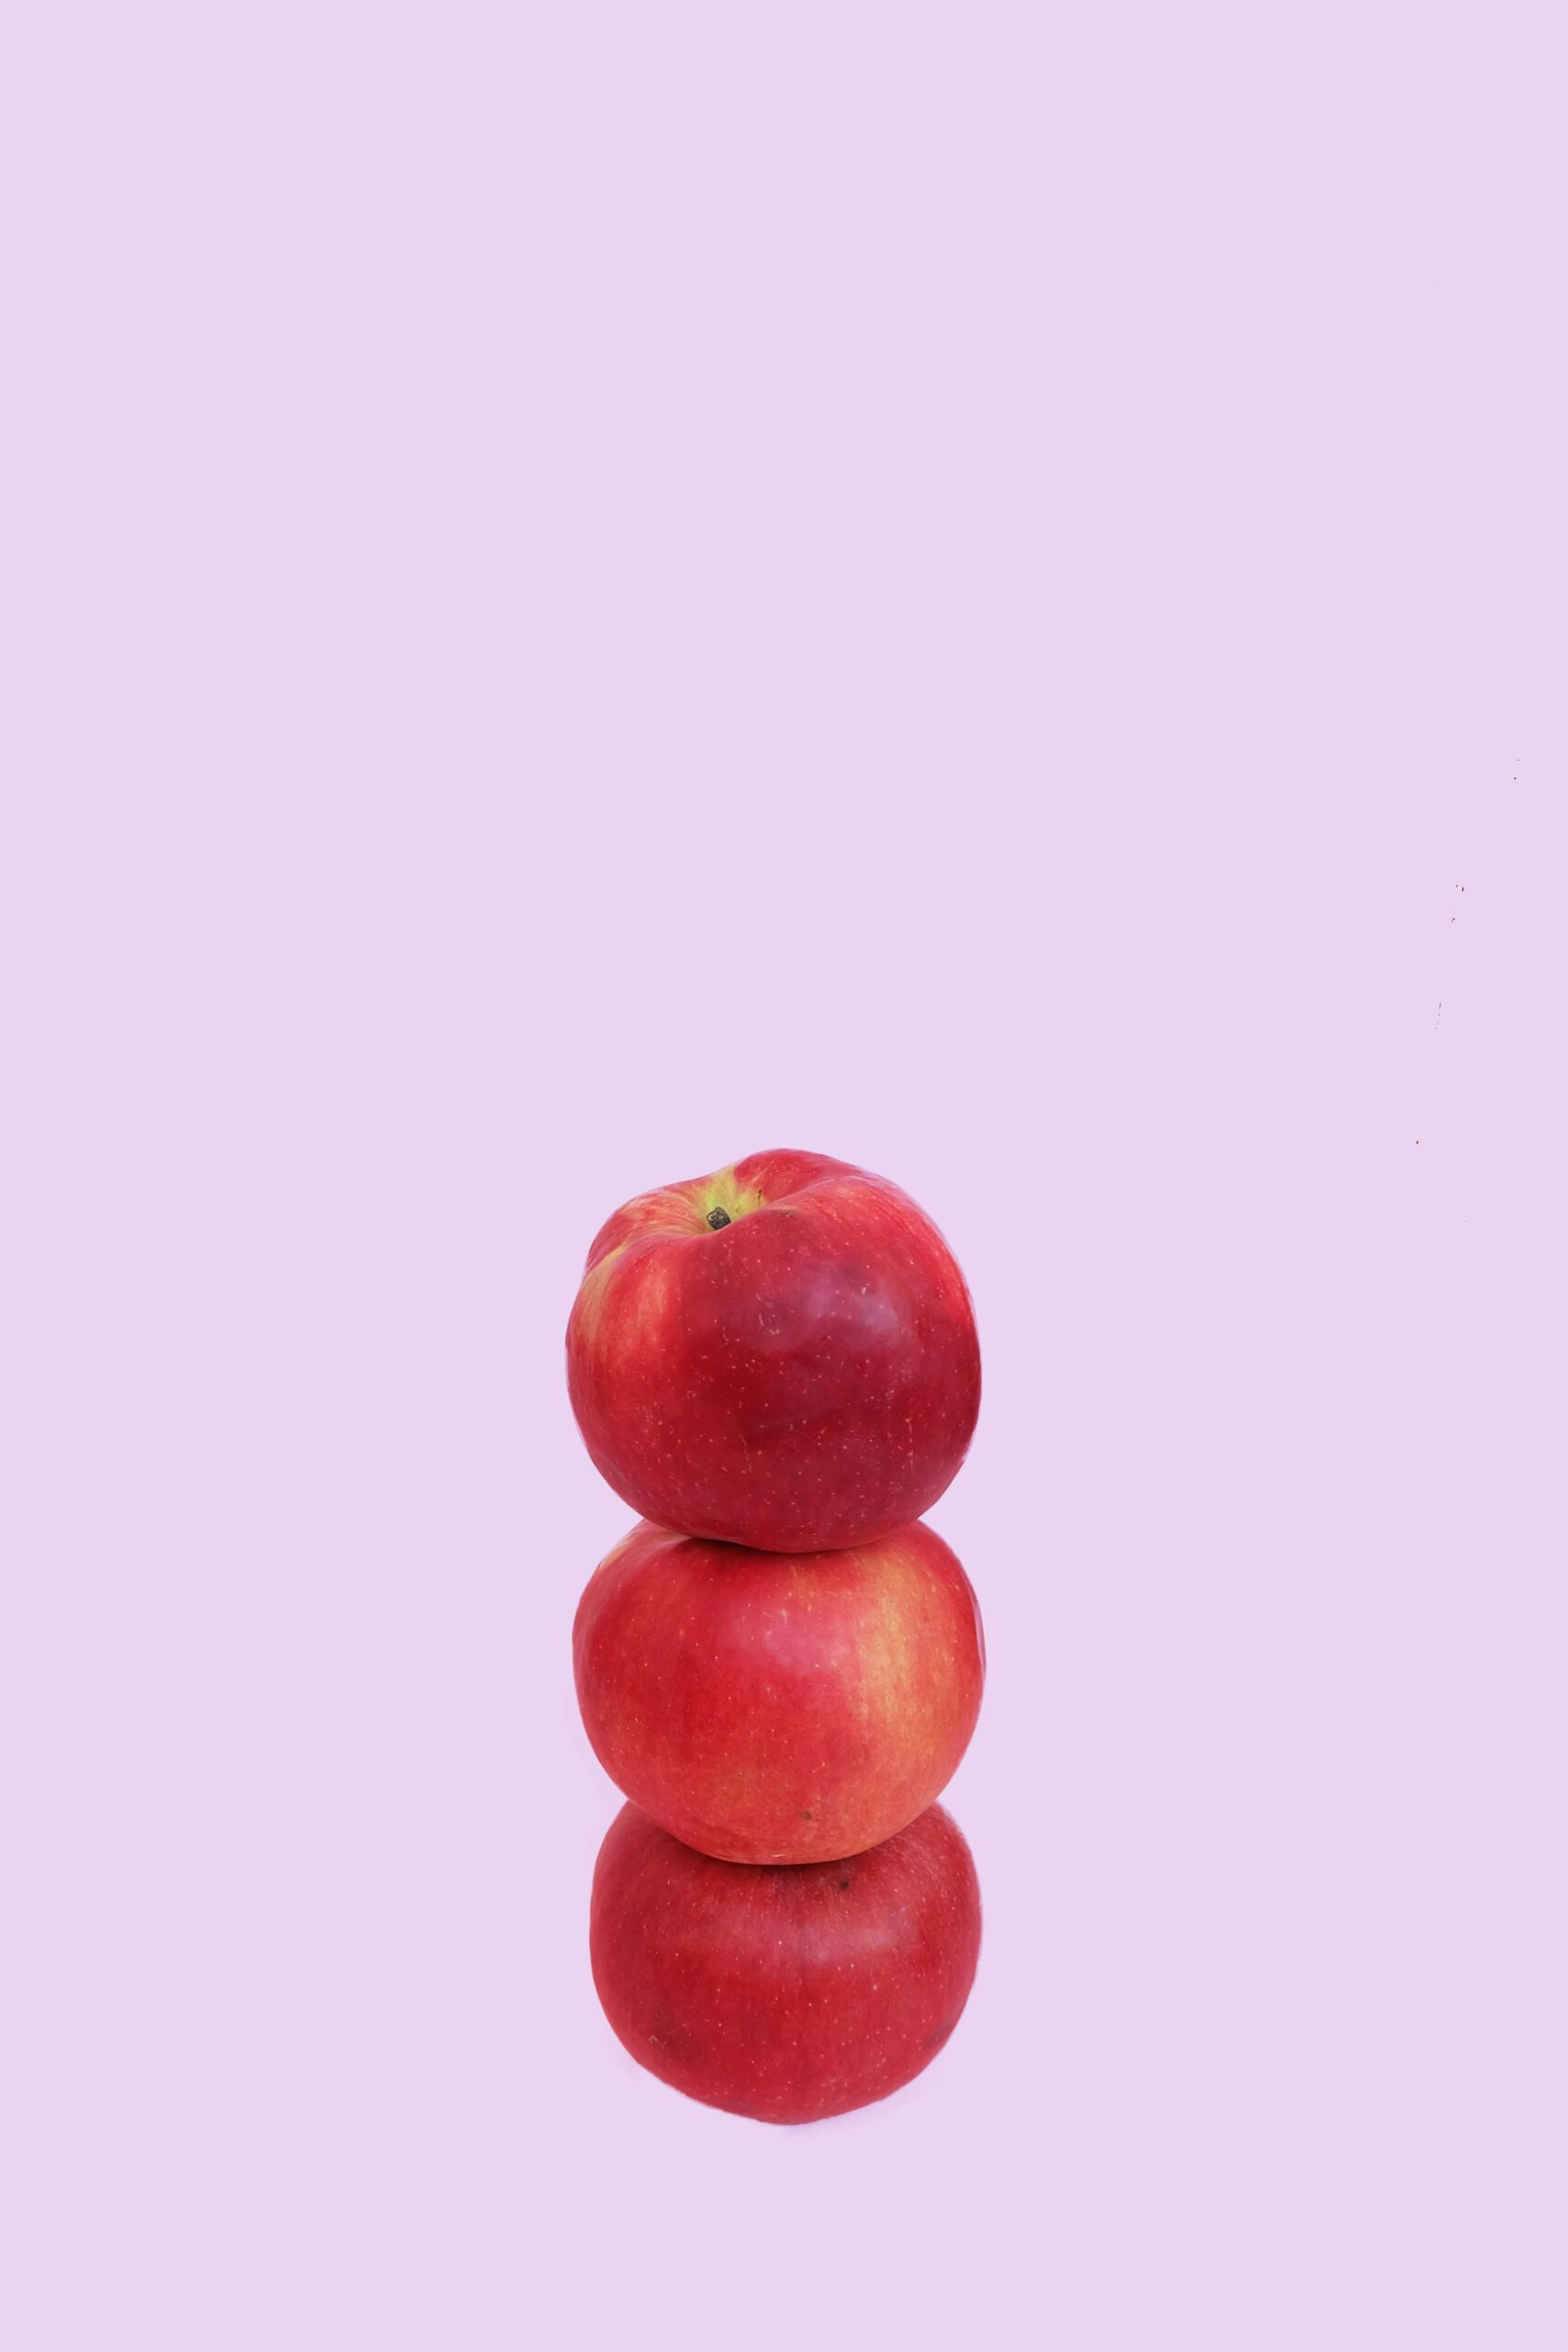 manfaat cuka apel